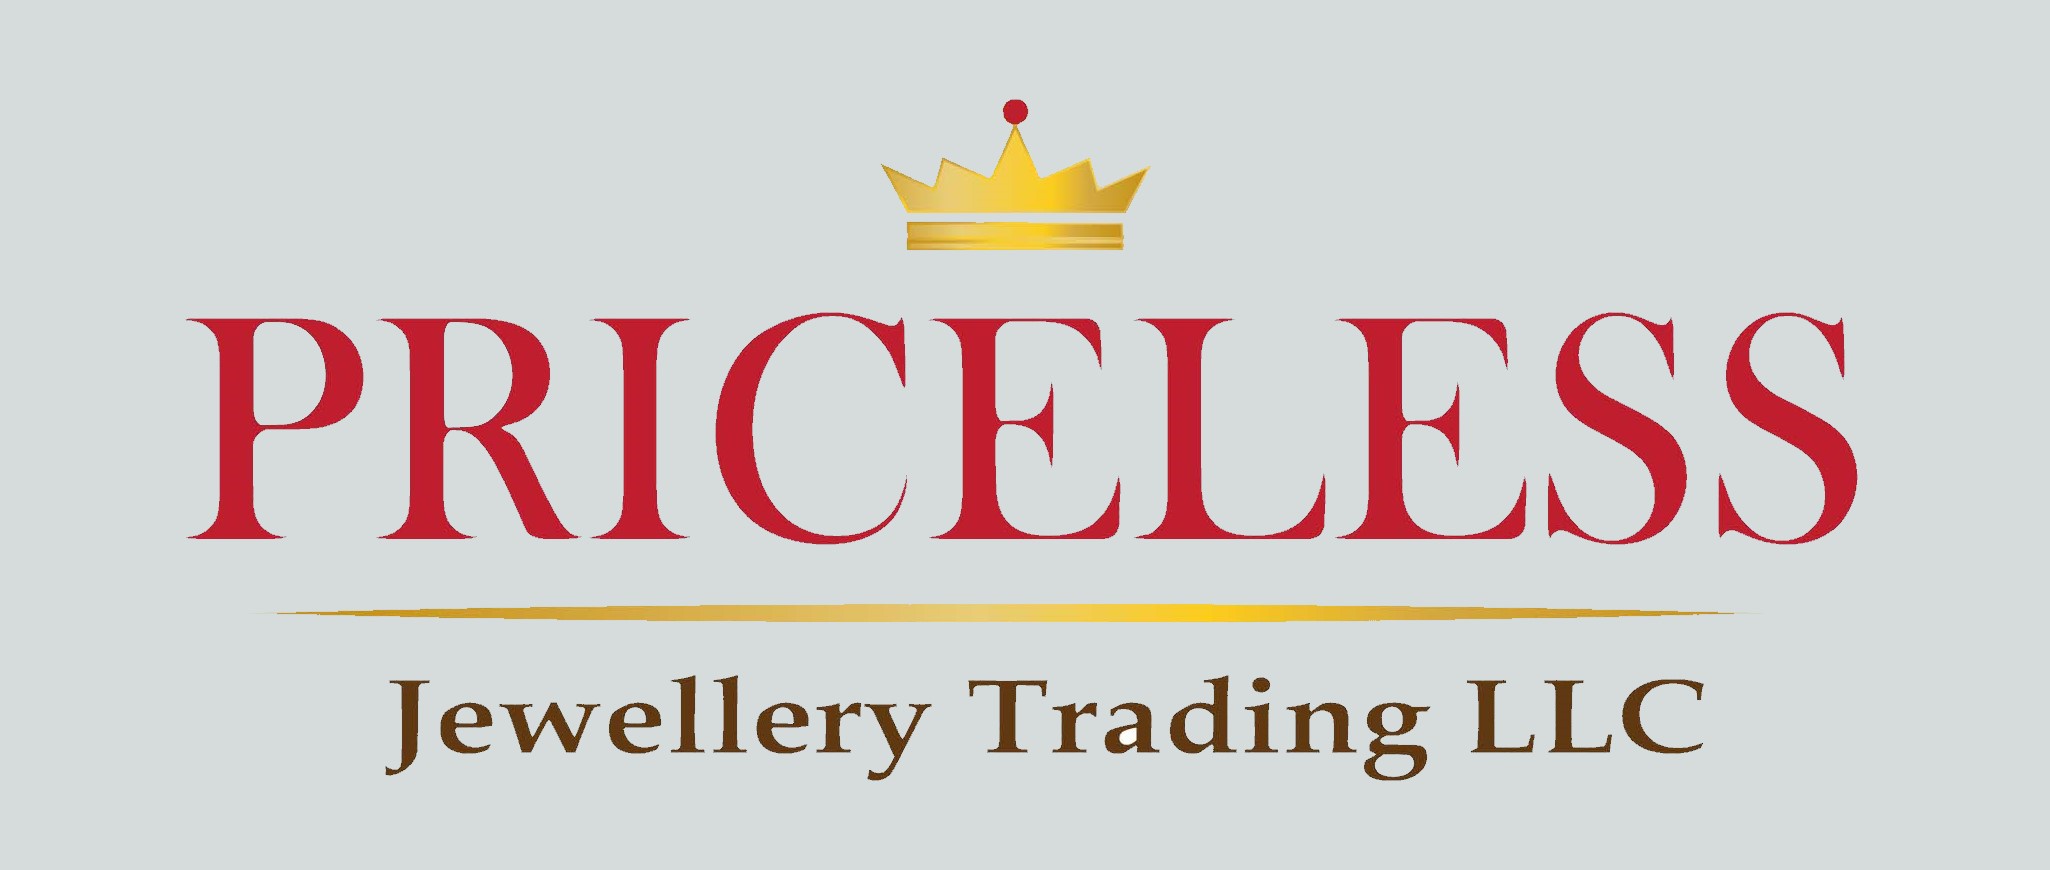 Priceless Jewellery Trading LLC.